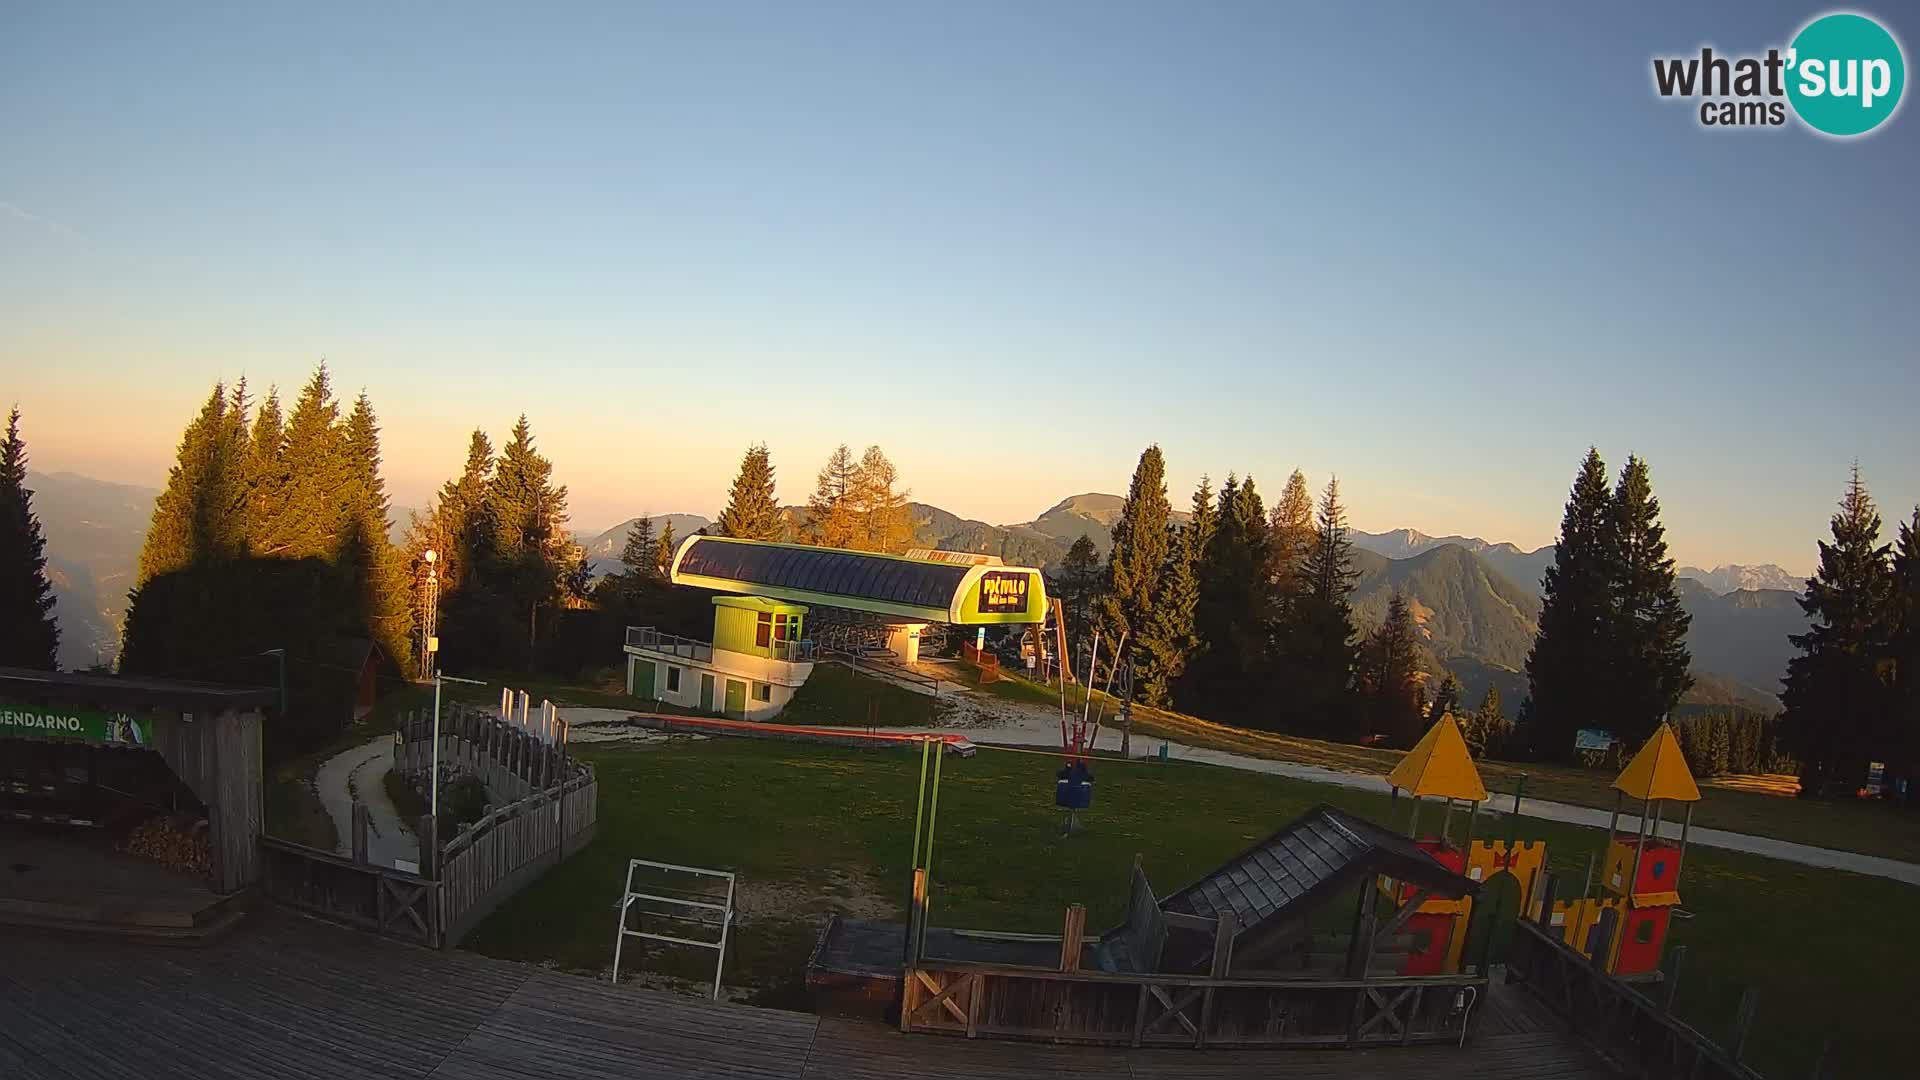 Alpska Perla Cerkno Počivalo camera en vivo – Eslovenia